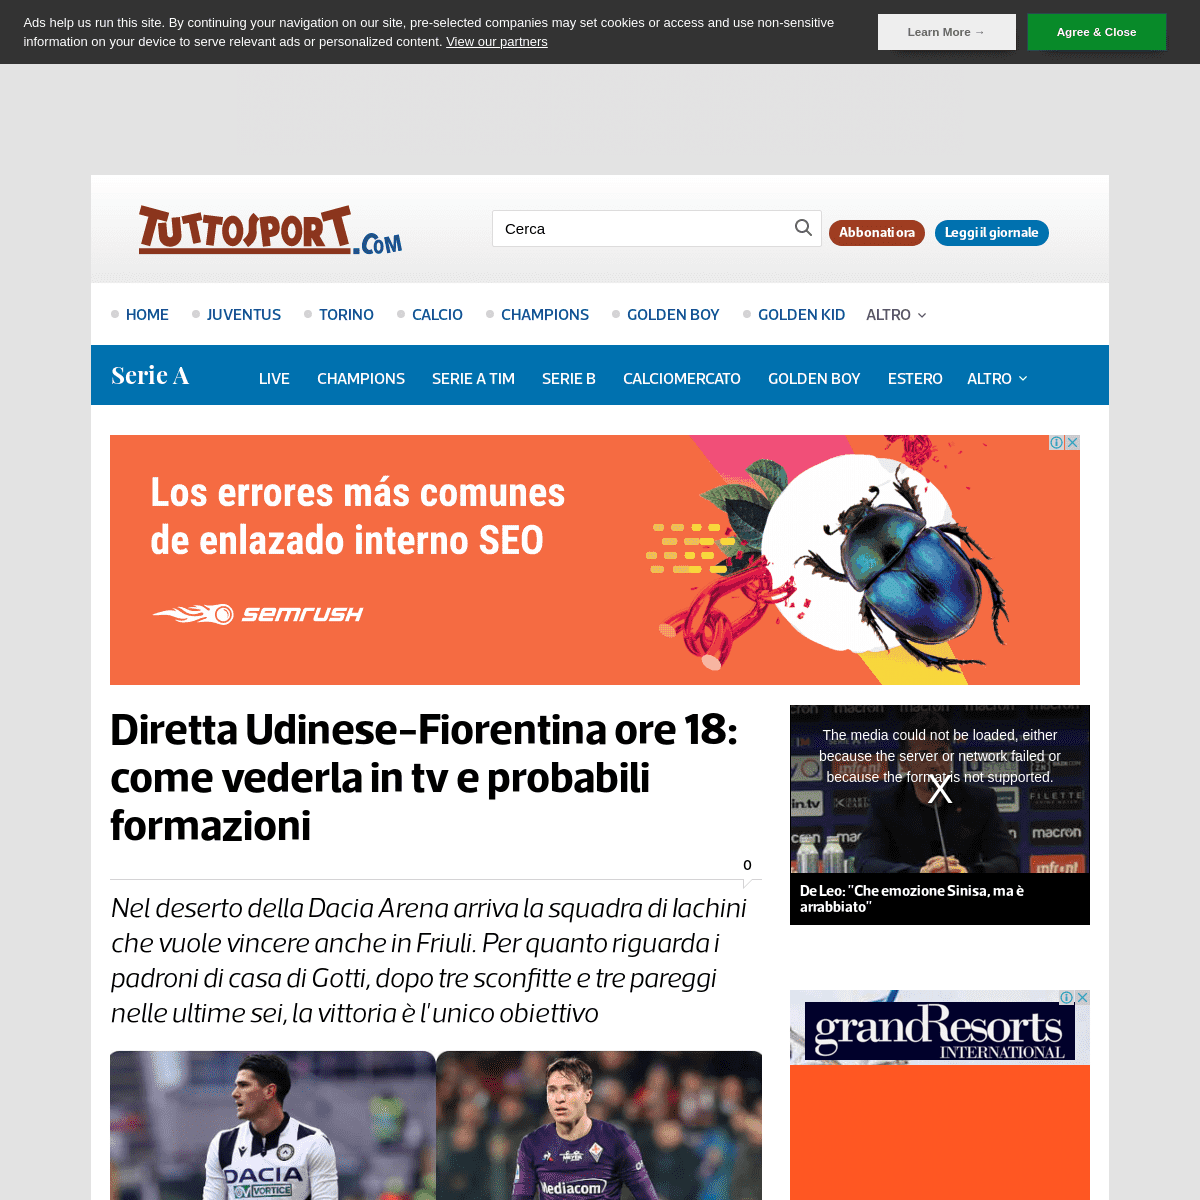 A complete backup of www.tuttosport.com/news/calcio/serie-a/2020/02/29-67267489/diretta_udinese-fiorentina_ore_18_come_vederla_i